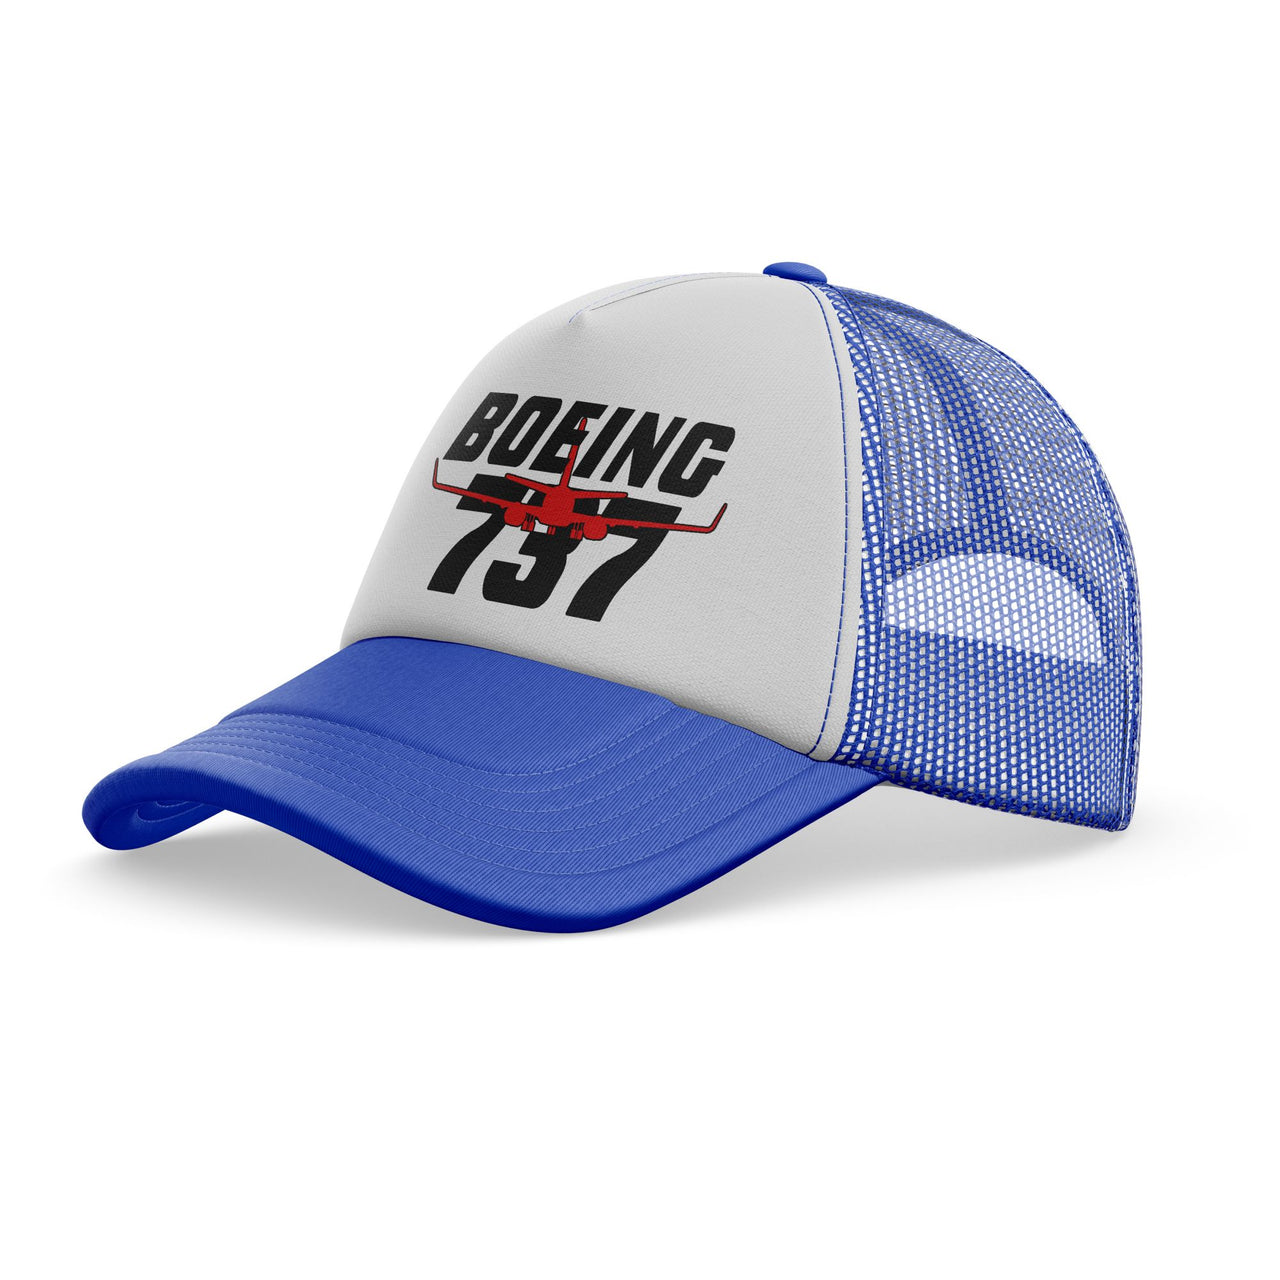 Amazing Boeing 737 Designed Trucker Caps & Hats